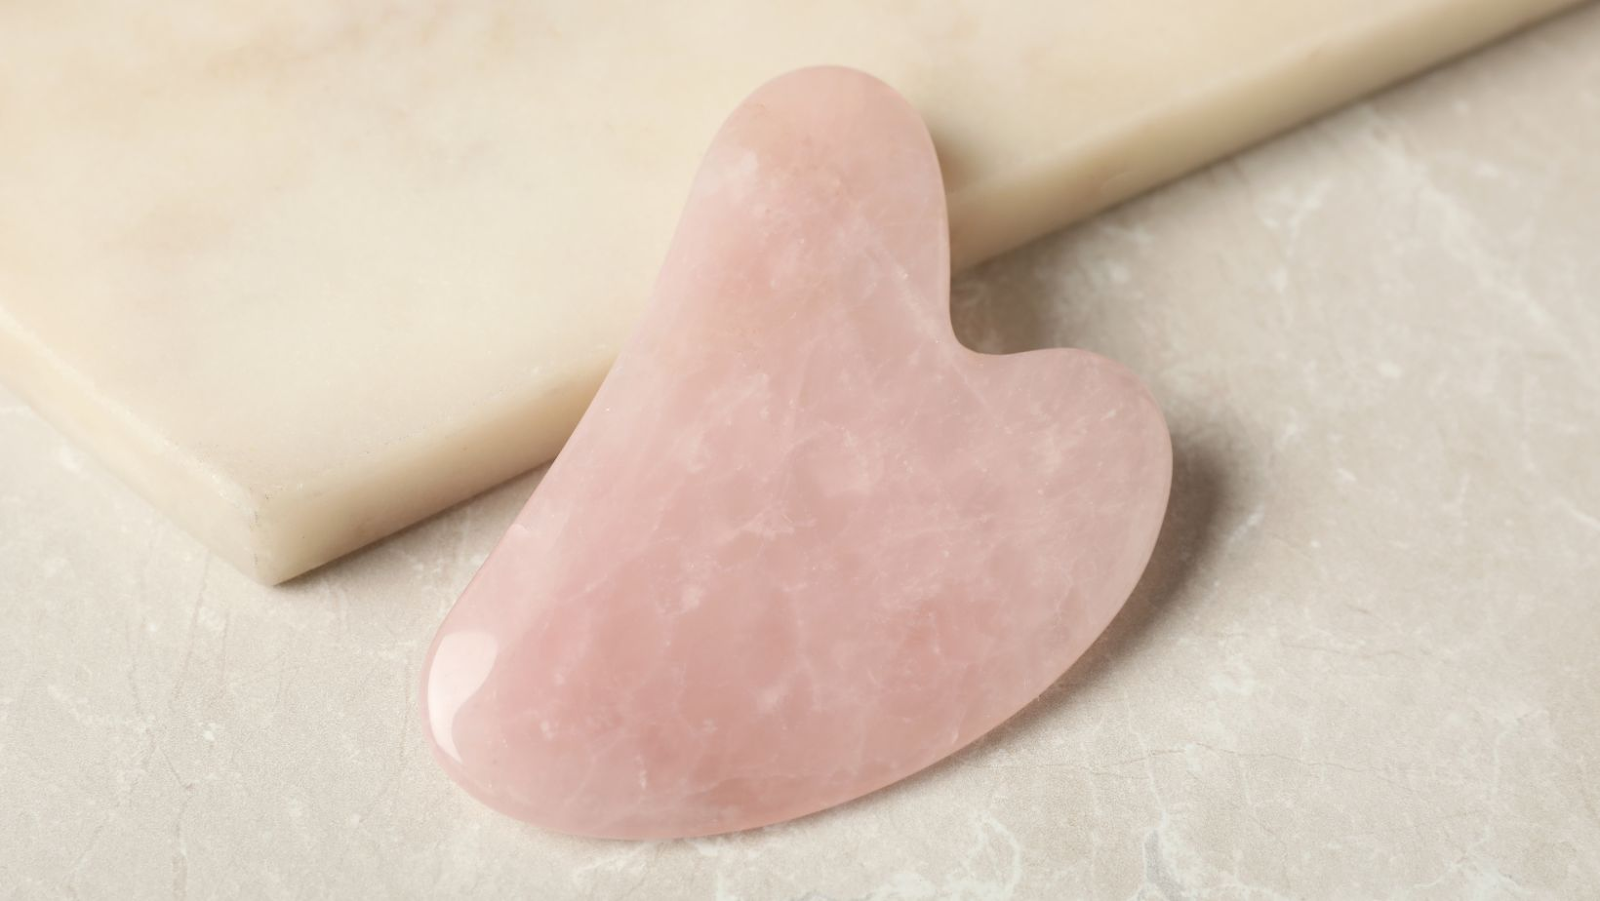 A pink quartz gua sha tool resting on a light coloured surface